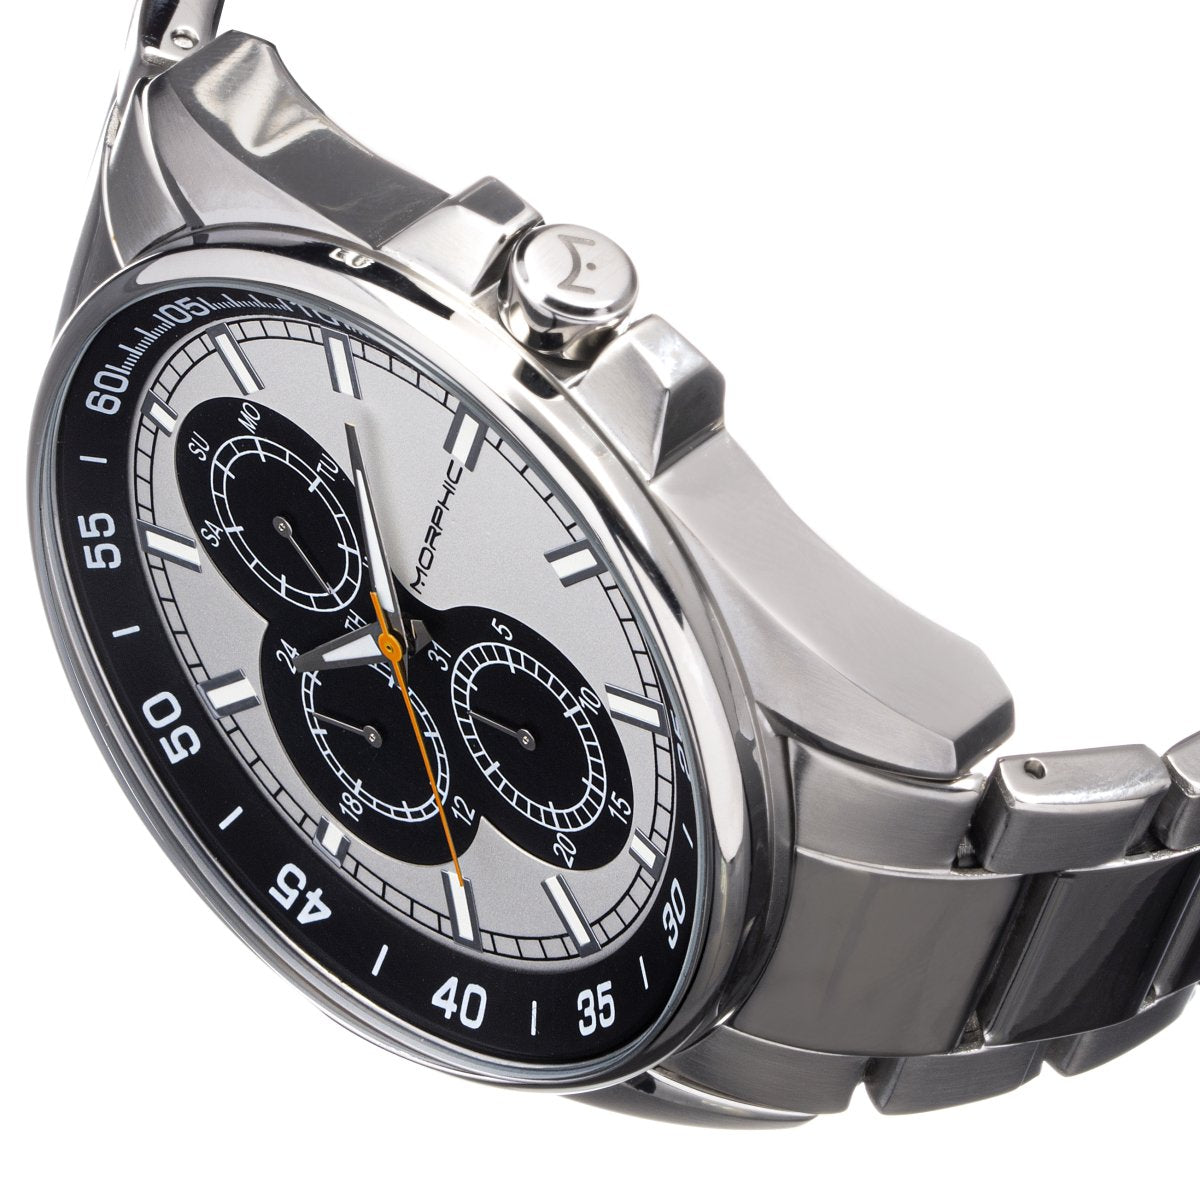 Morphic M92 Series Bracelet Watch w/Day/Date - Silver & Black - MPH9201